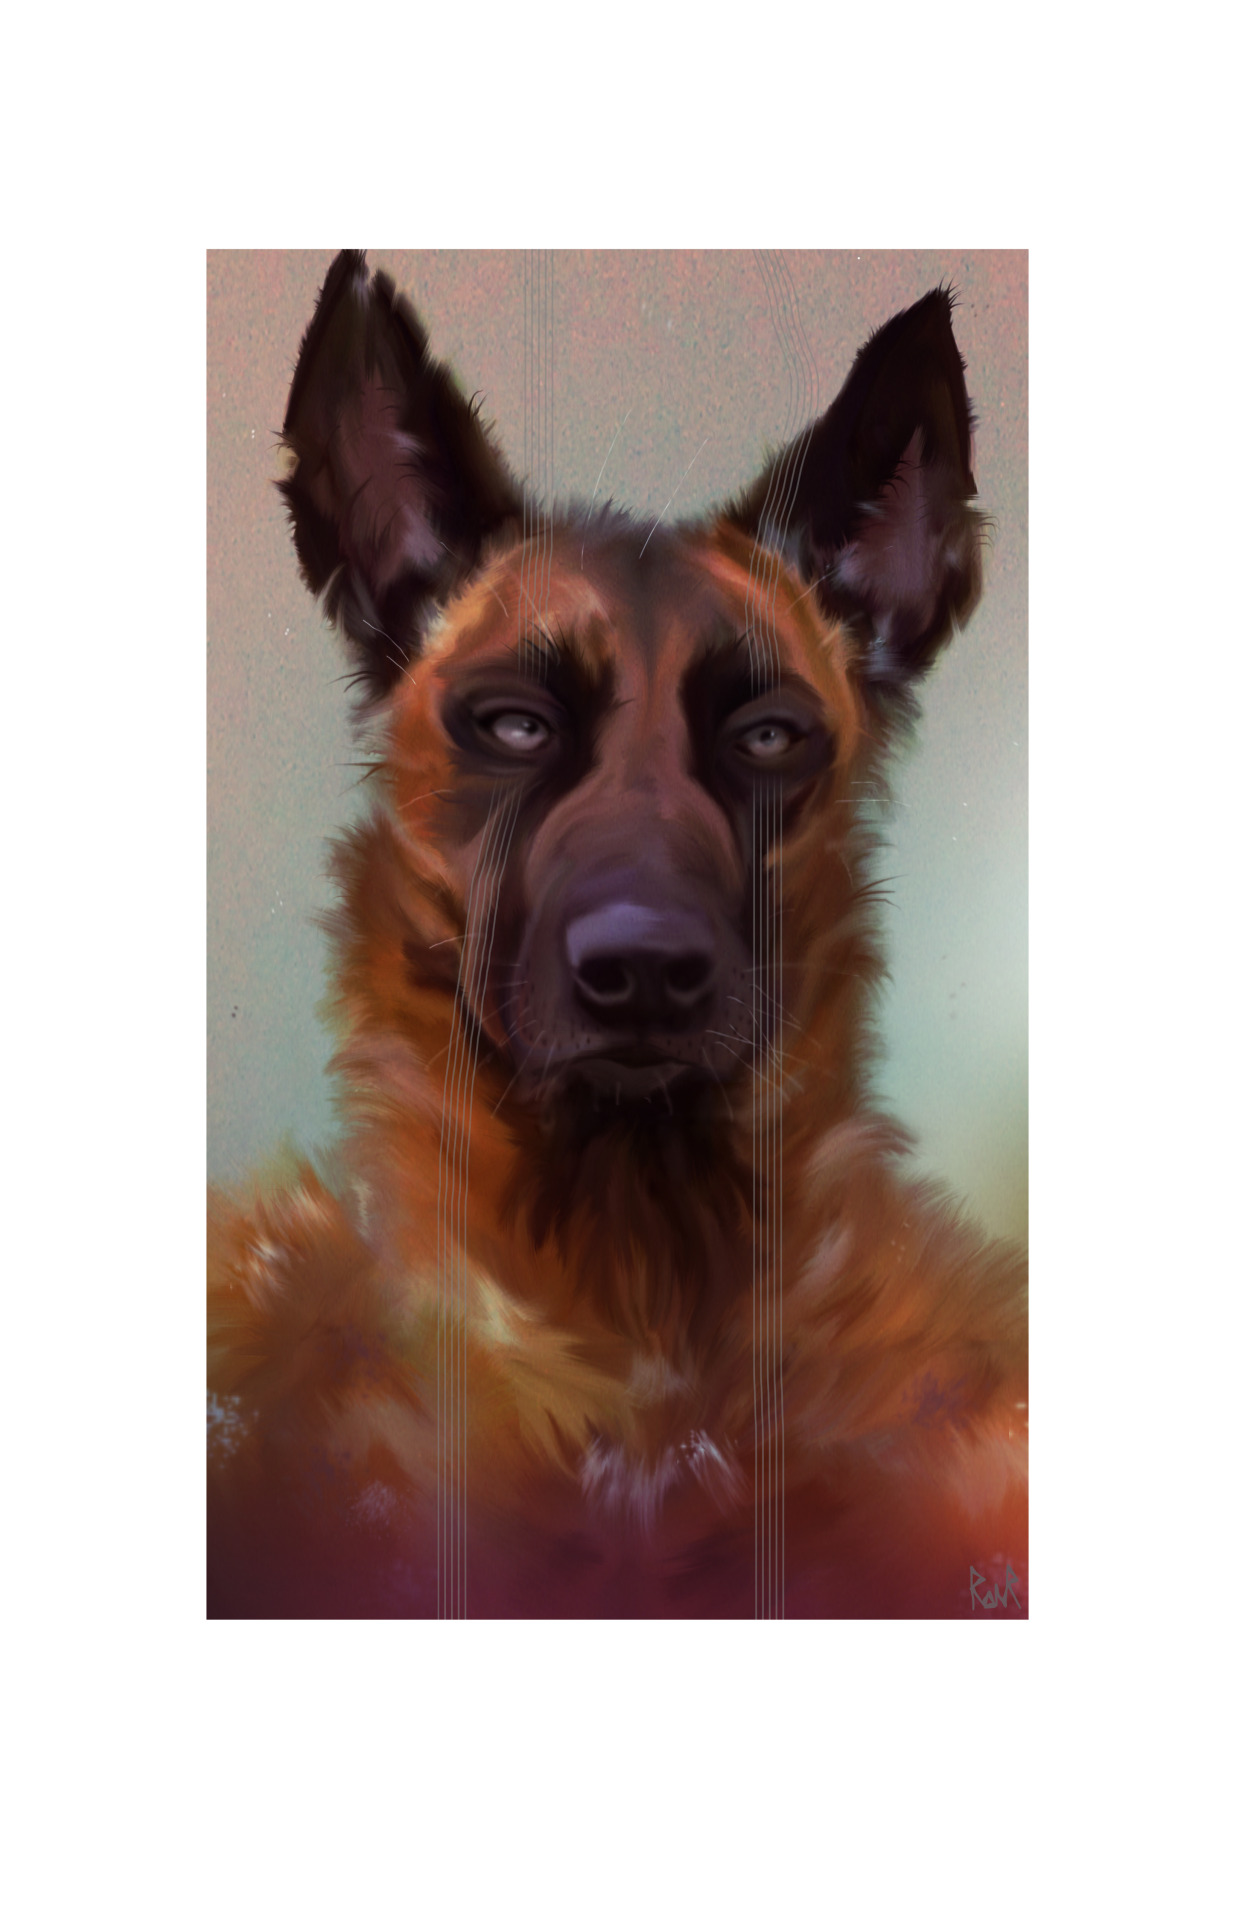 THAT HEAVY HEART #RAWR#Slushed hyena#artist#illustration#digital #artist on tumblr #werewolf#werewolf art#dog#big dog#heavy#canine#wolf#wolves#somber#fuzzy#fluffy#furry#anthro#anthropomorphic#Anthro art